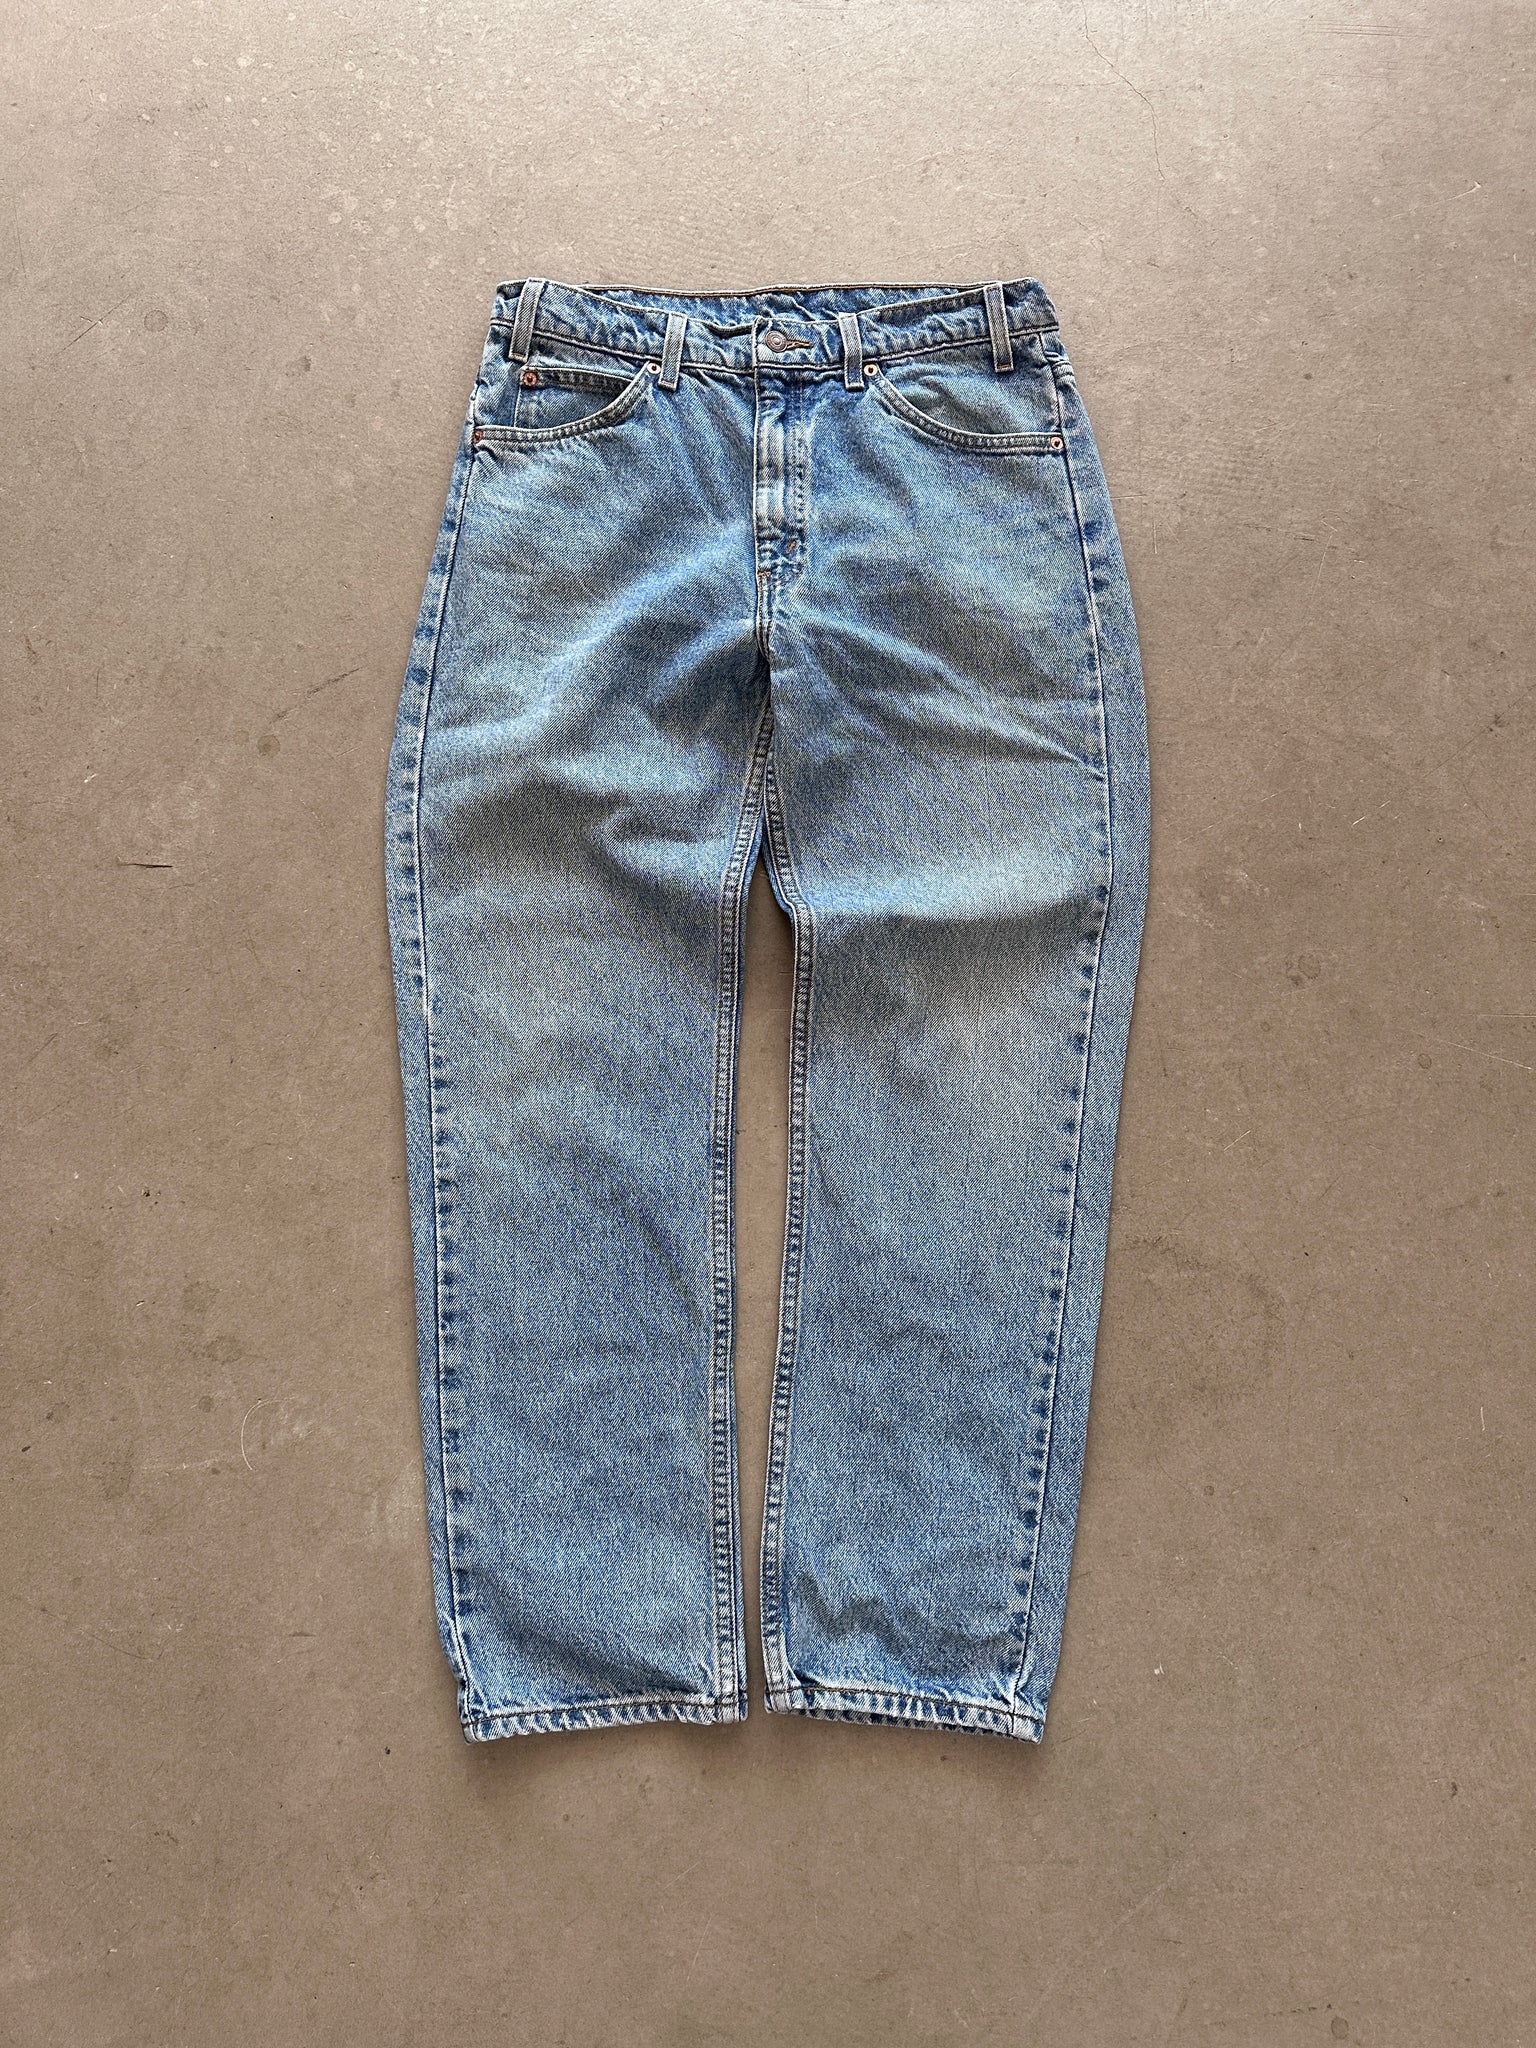 1995 Levi's Orange Tab 505 Jeans - 33 x 30